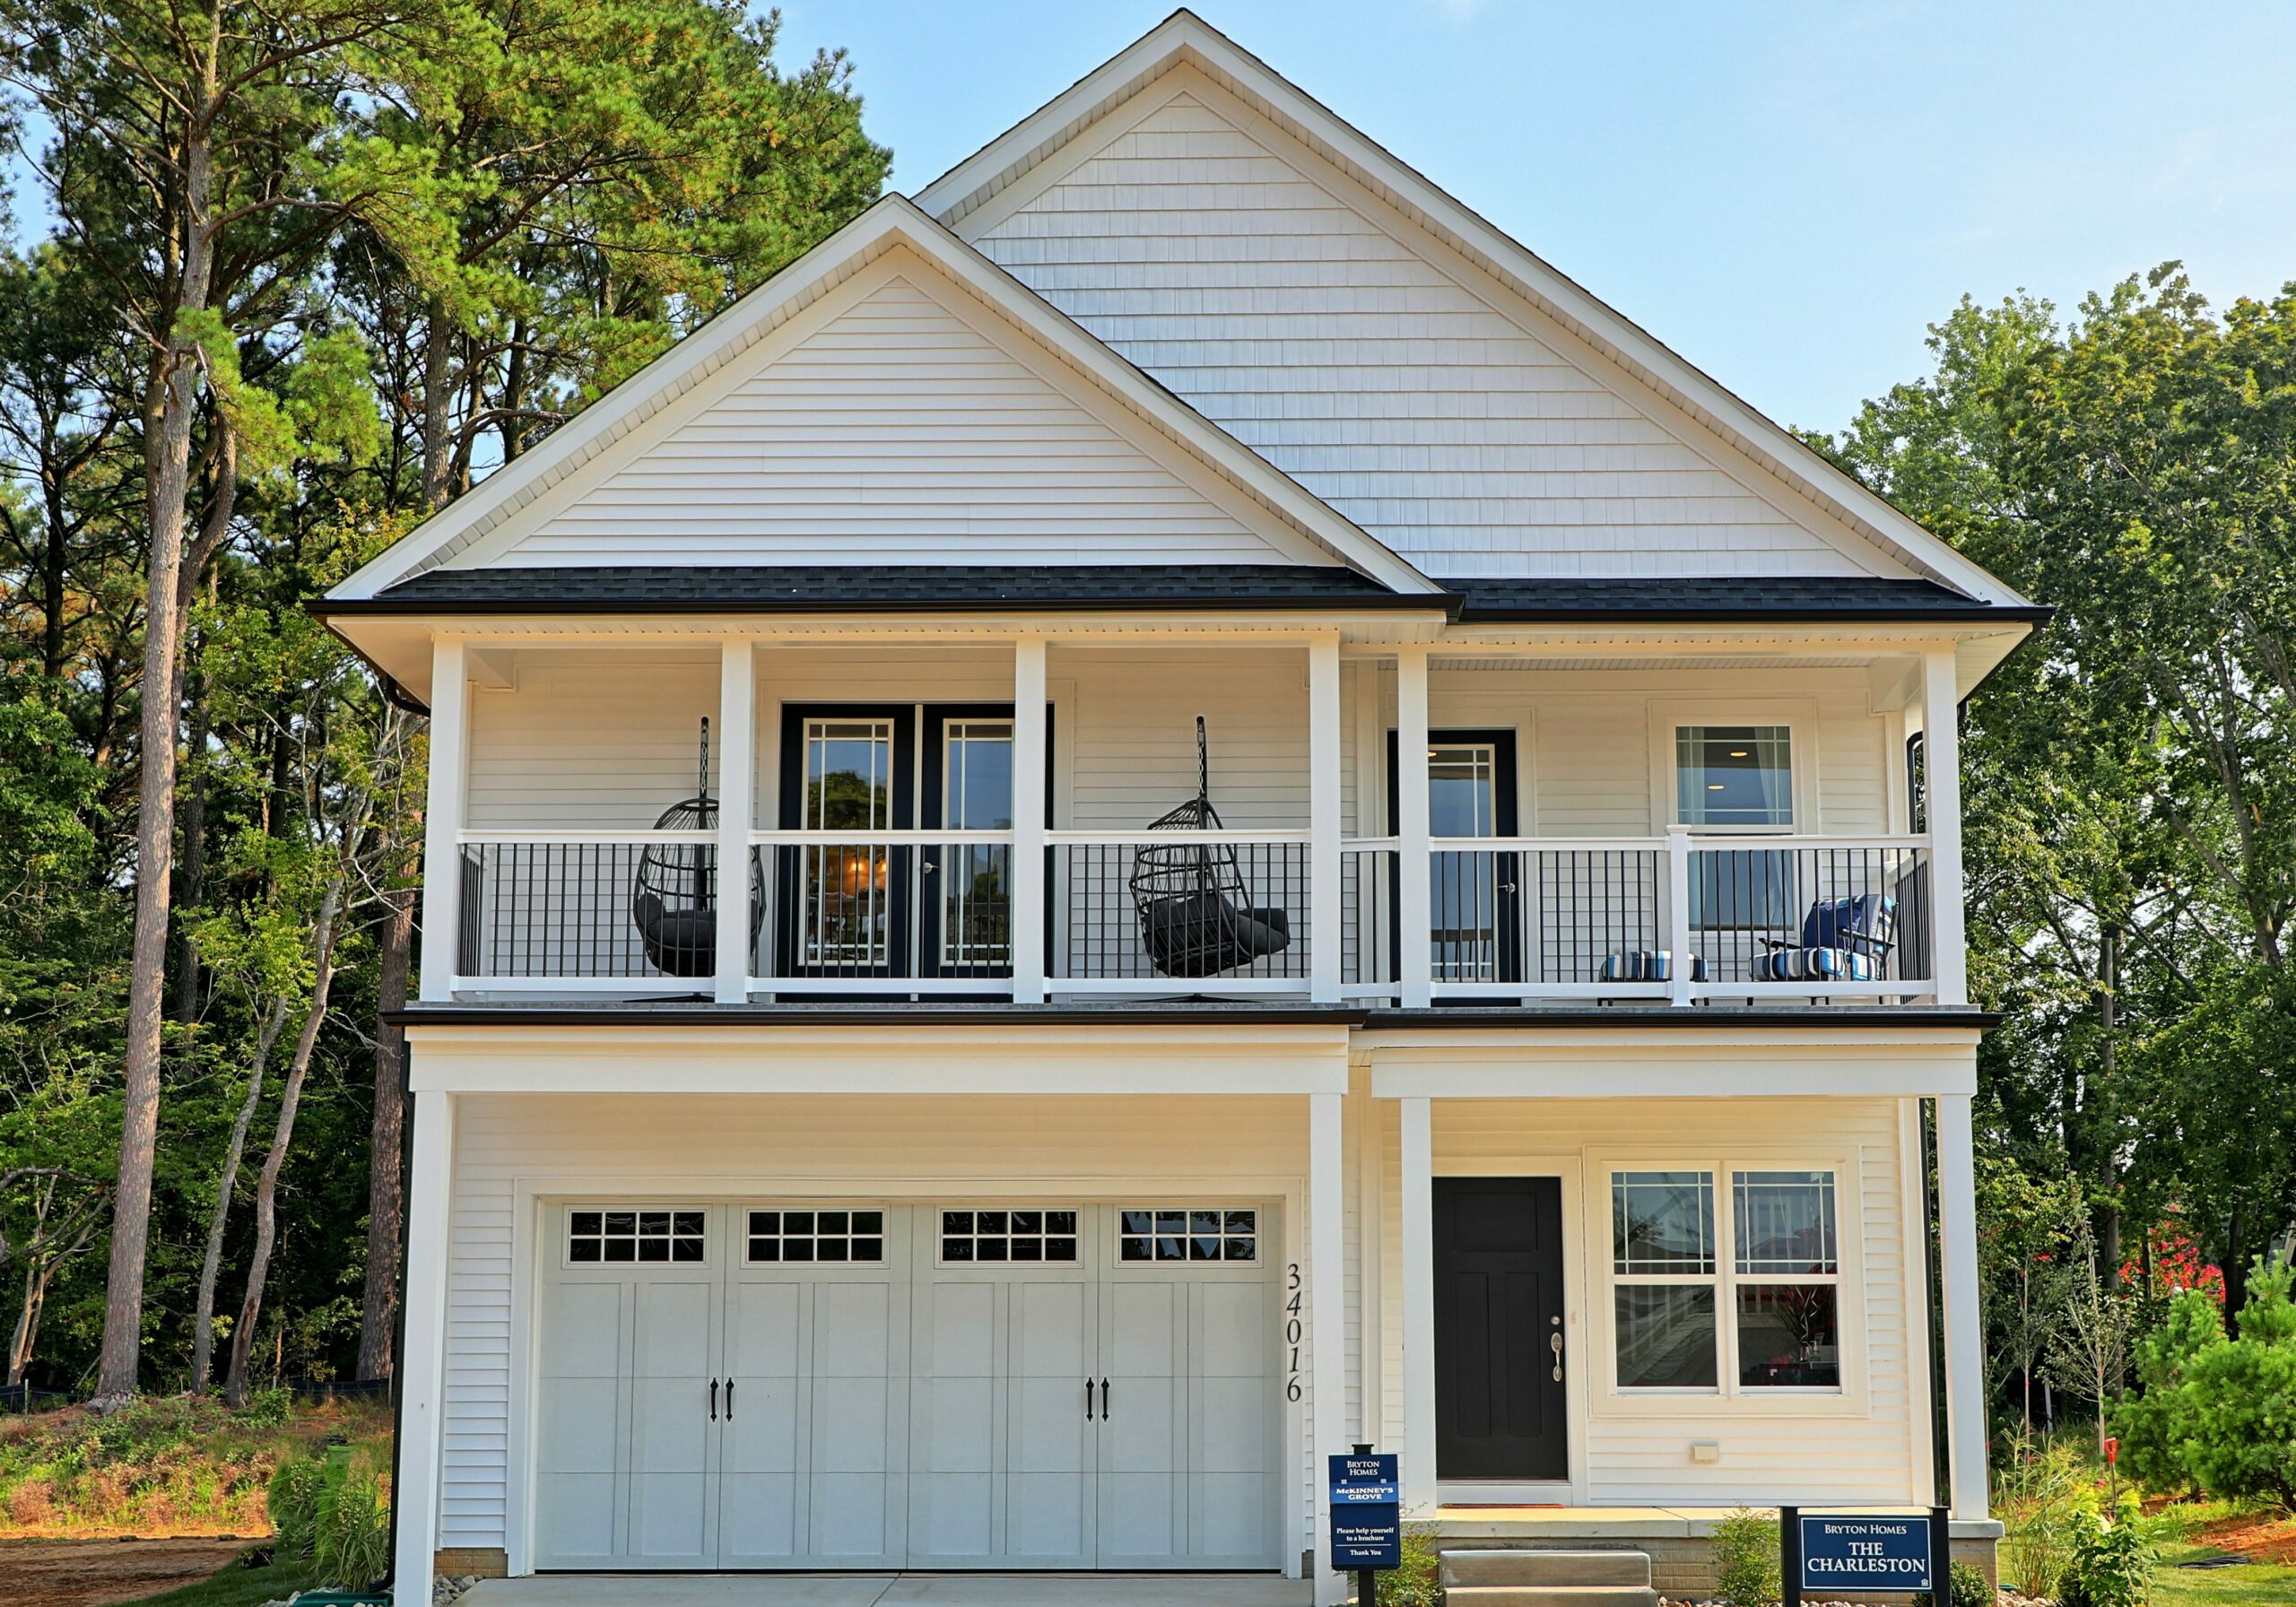 The Charleston Home Model by Bryton Homes